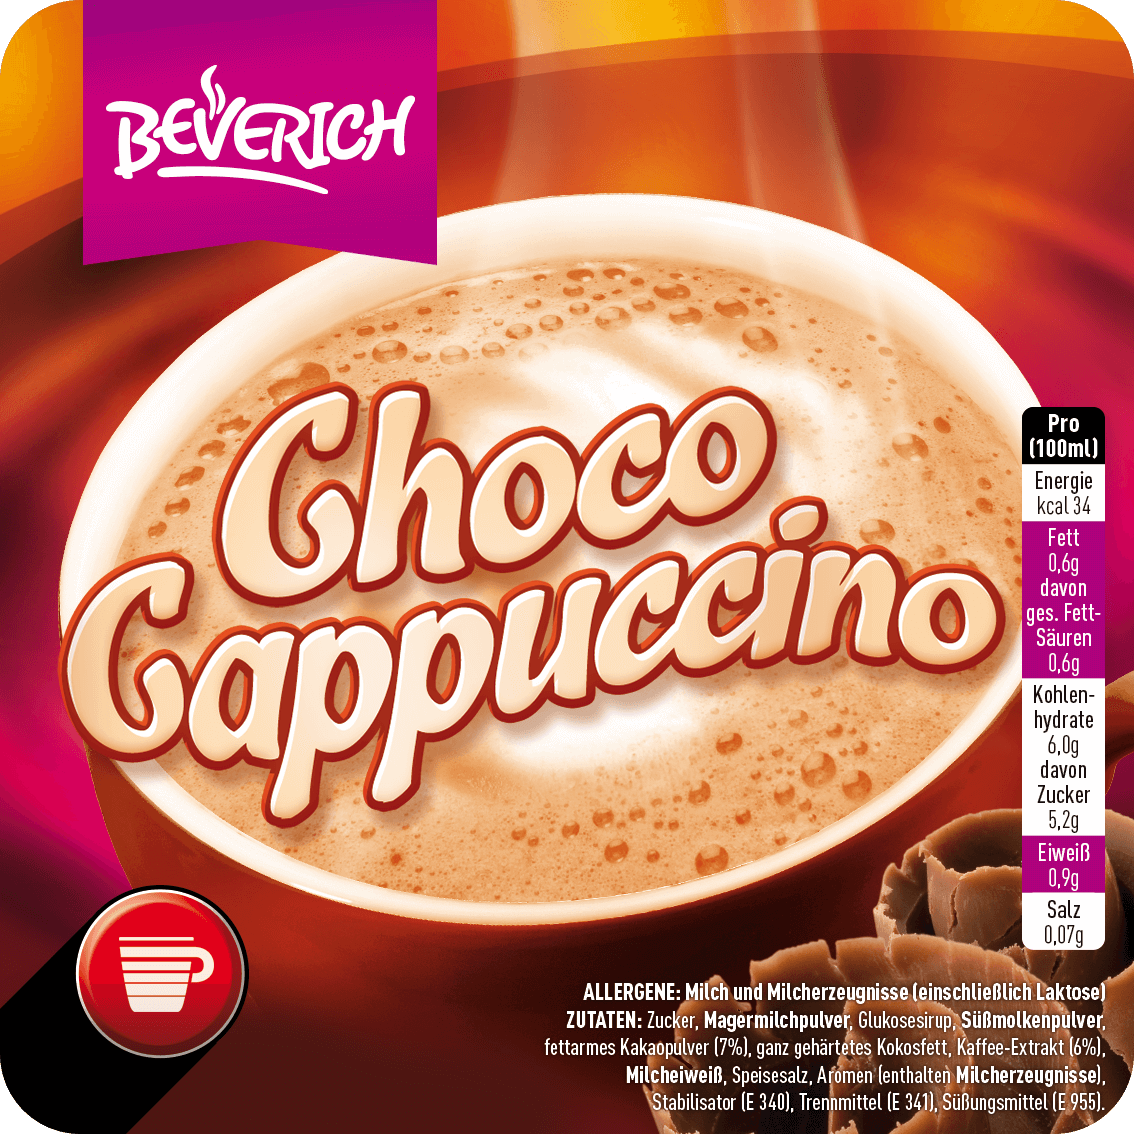 BEVERICH - Choco Cappuccino